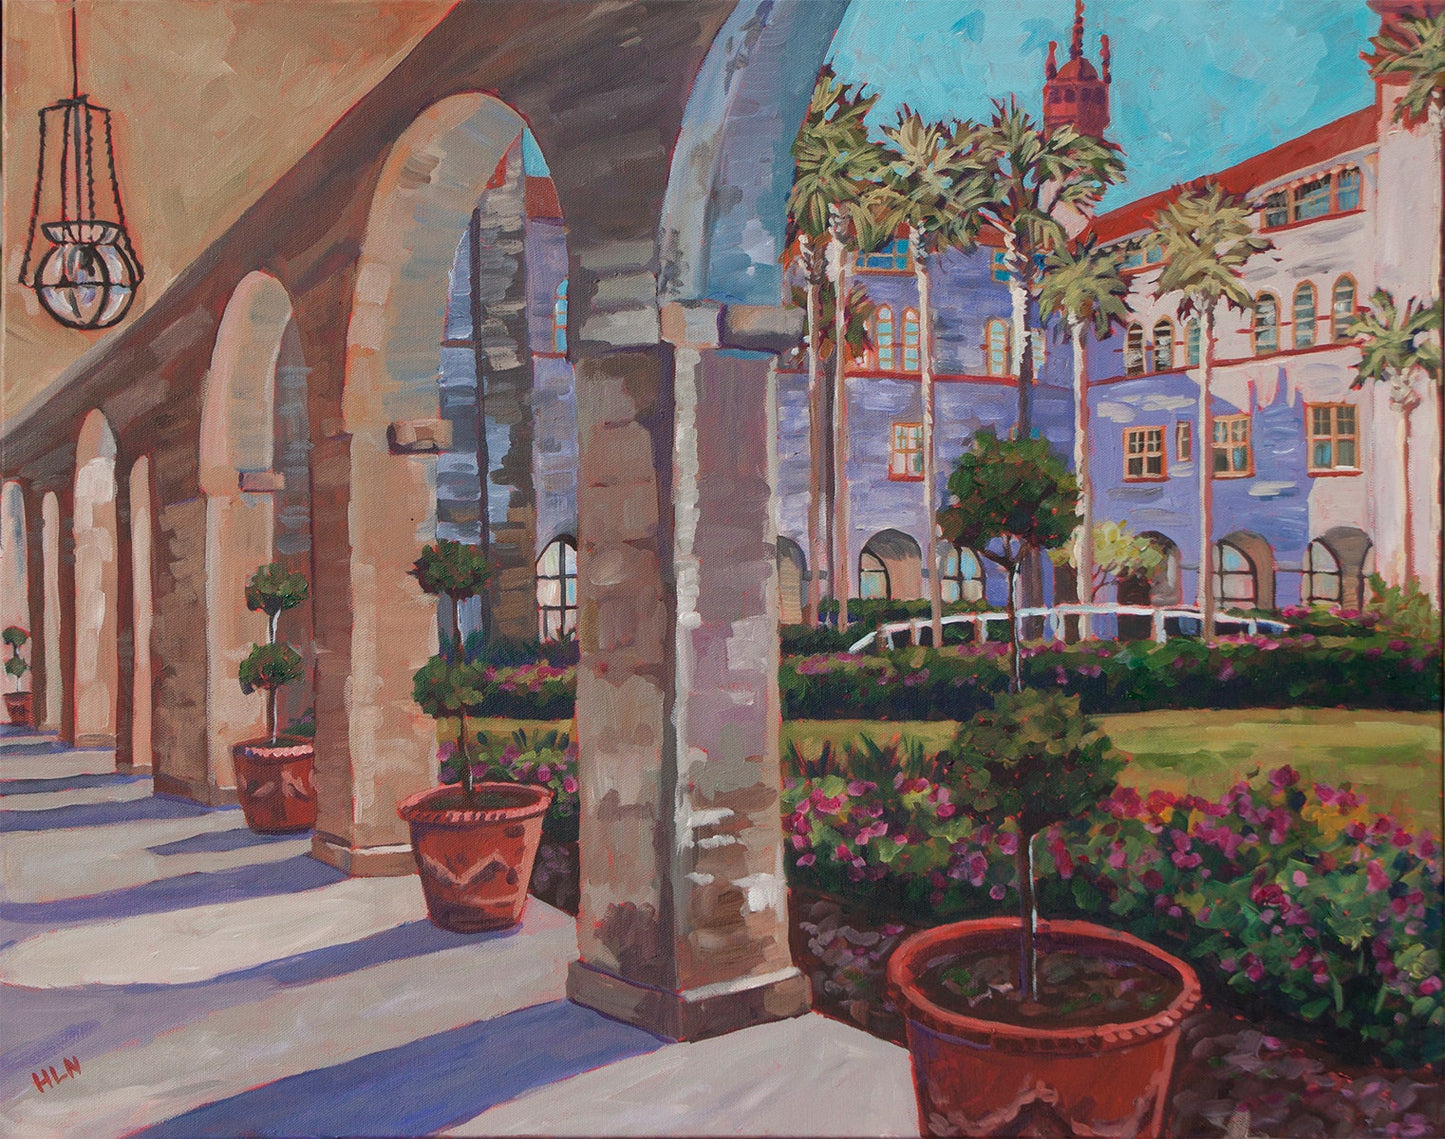 painting Lightner Museum courtyard formerly Hotel Alcazar in St Augustine Florida